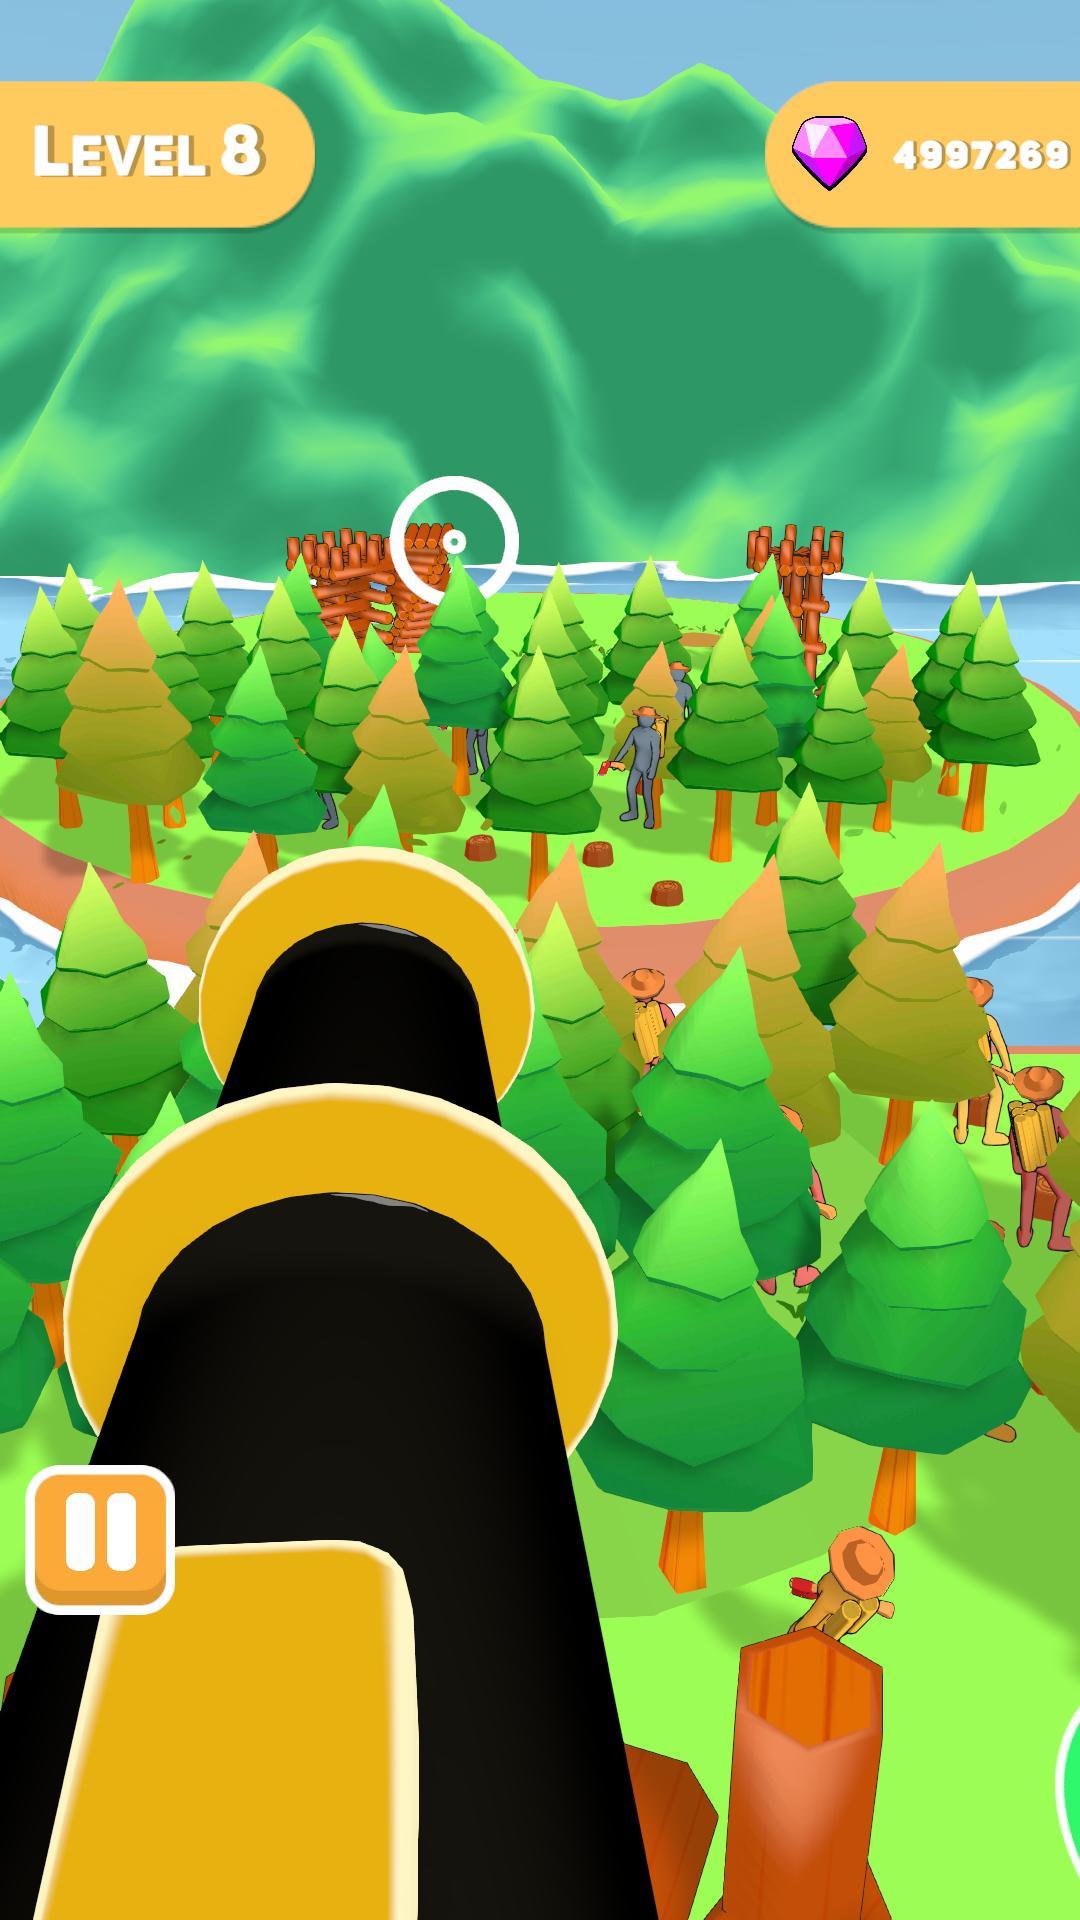 Lumber Empire: Jogos de Tycoon na App Store